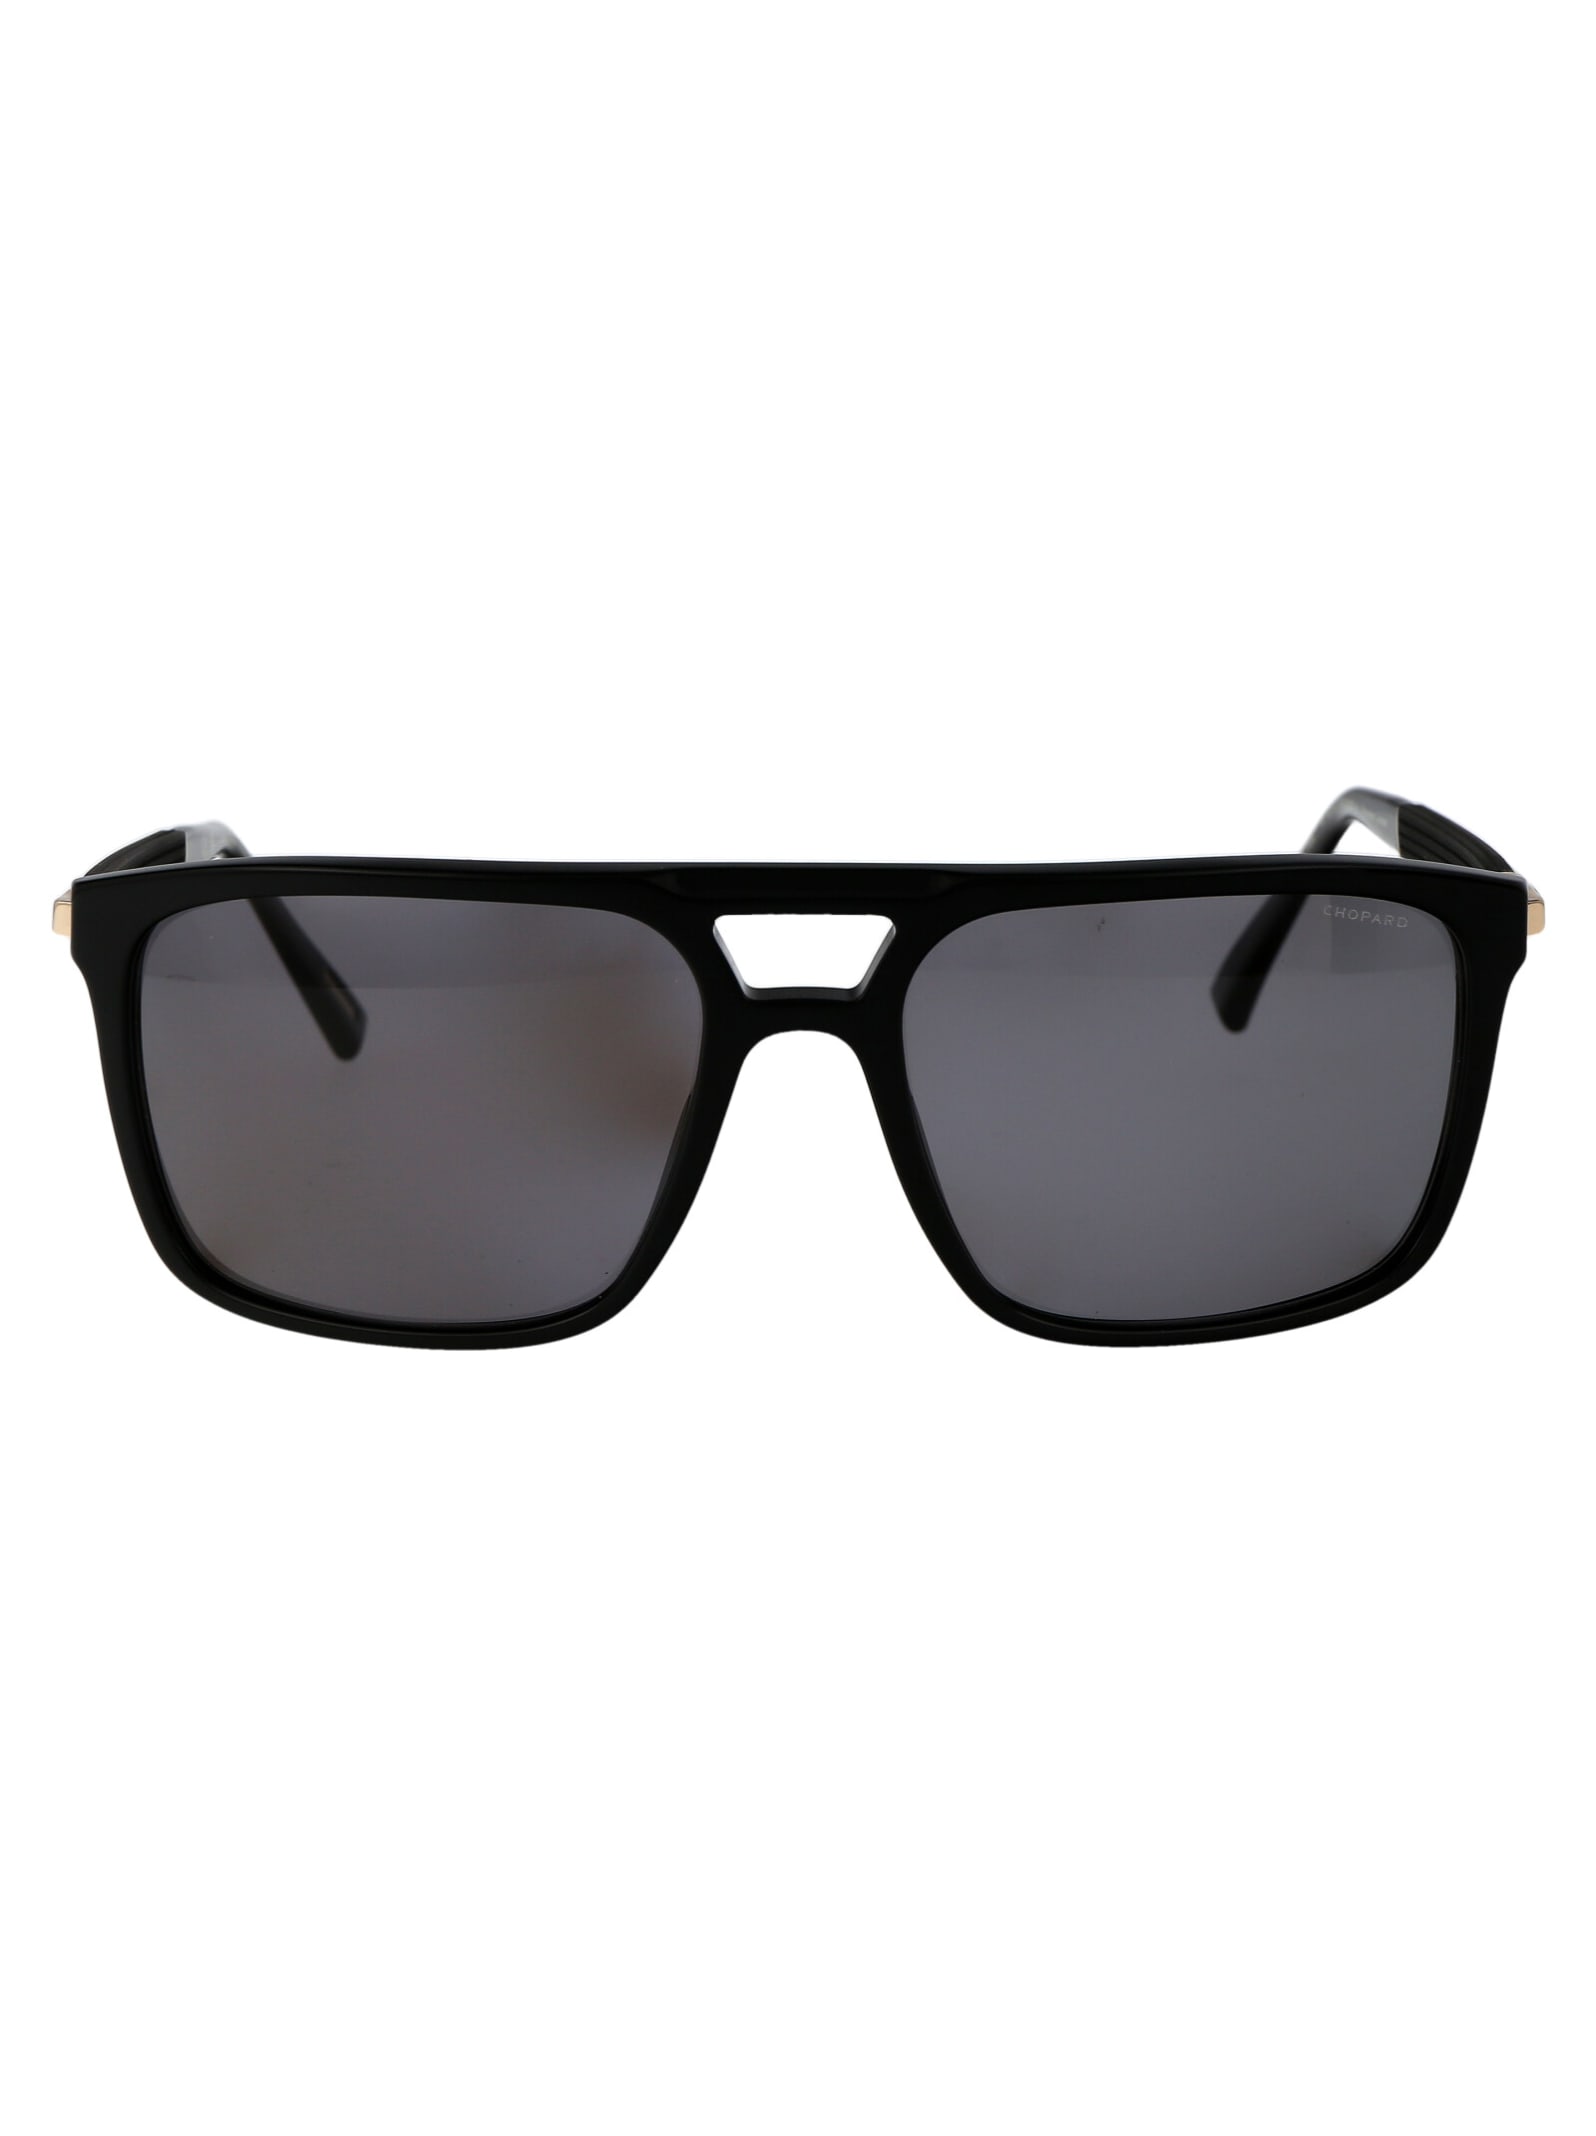 Sch311 Sunglasses